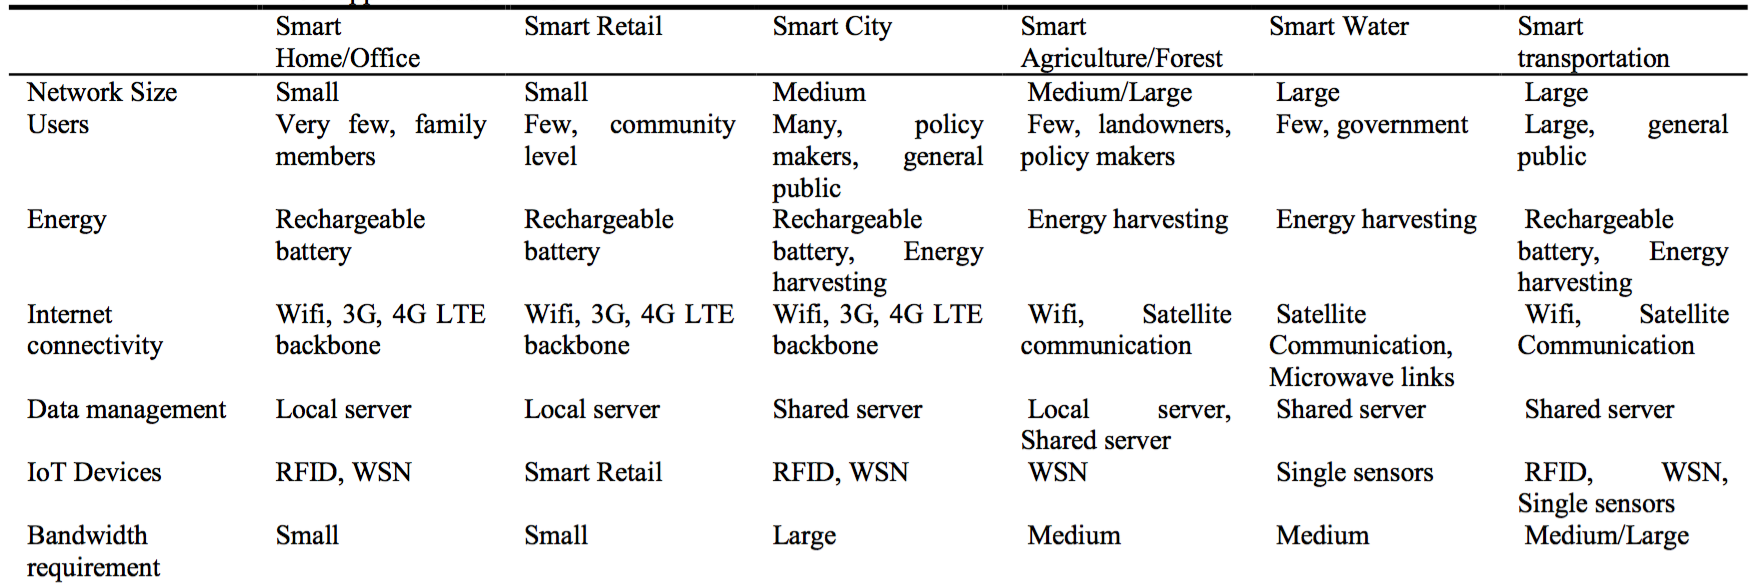 Some suggested applications of IoT to enterprise (Gubbi et al. 2013)